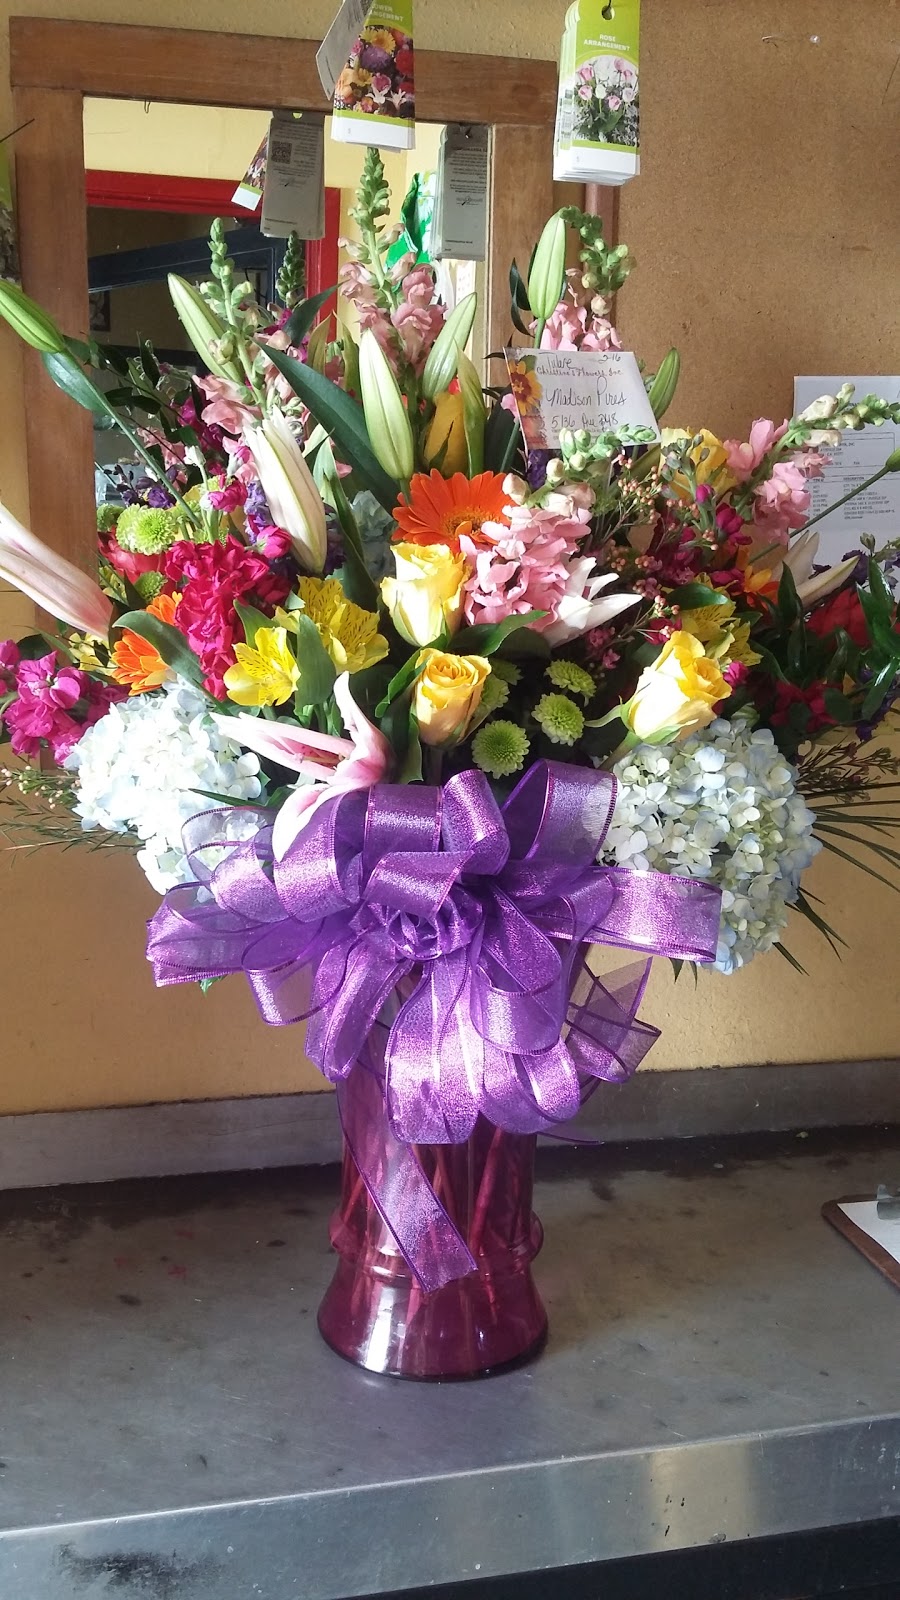 Christines Flowers | 10815 Avenue 264, Visalia, CA 93277, USA | Phone: (559) 688-7874